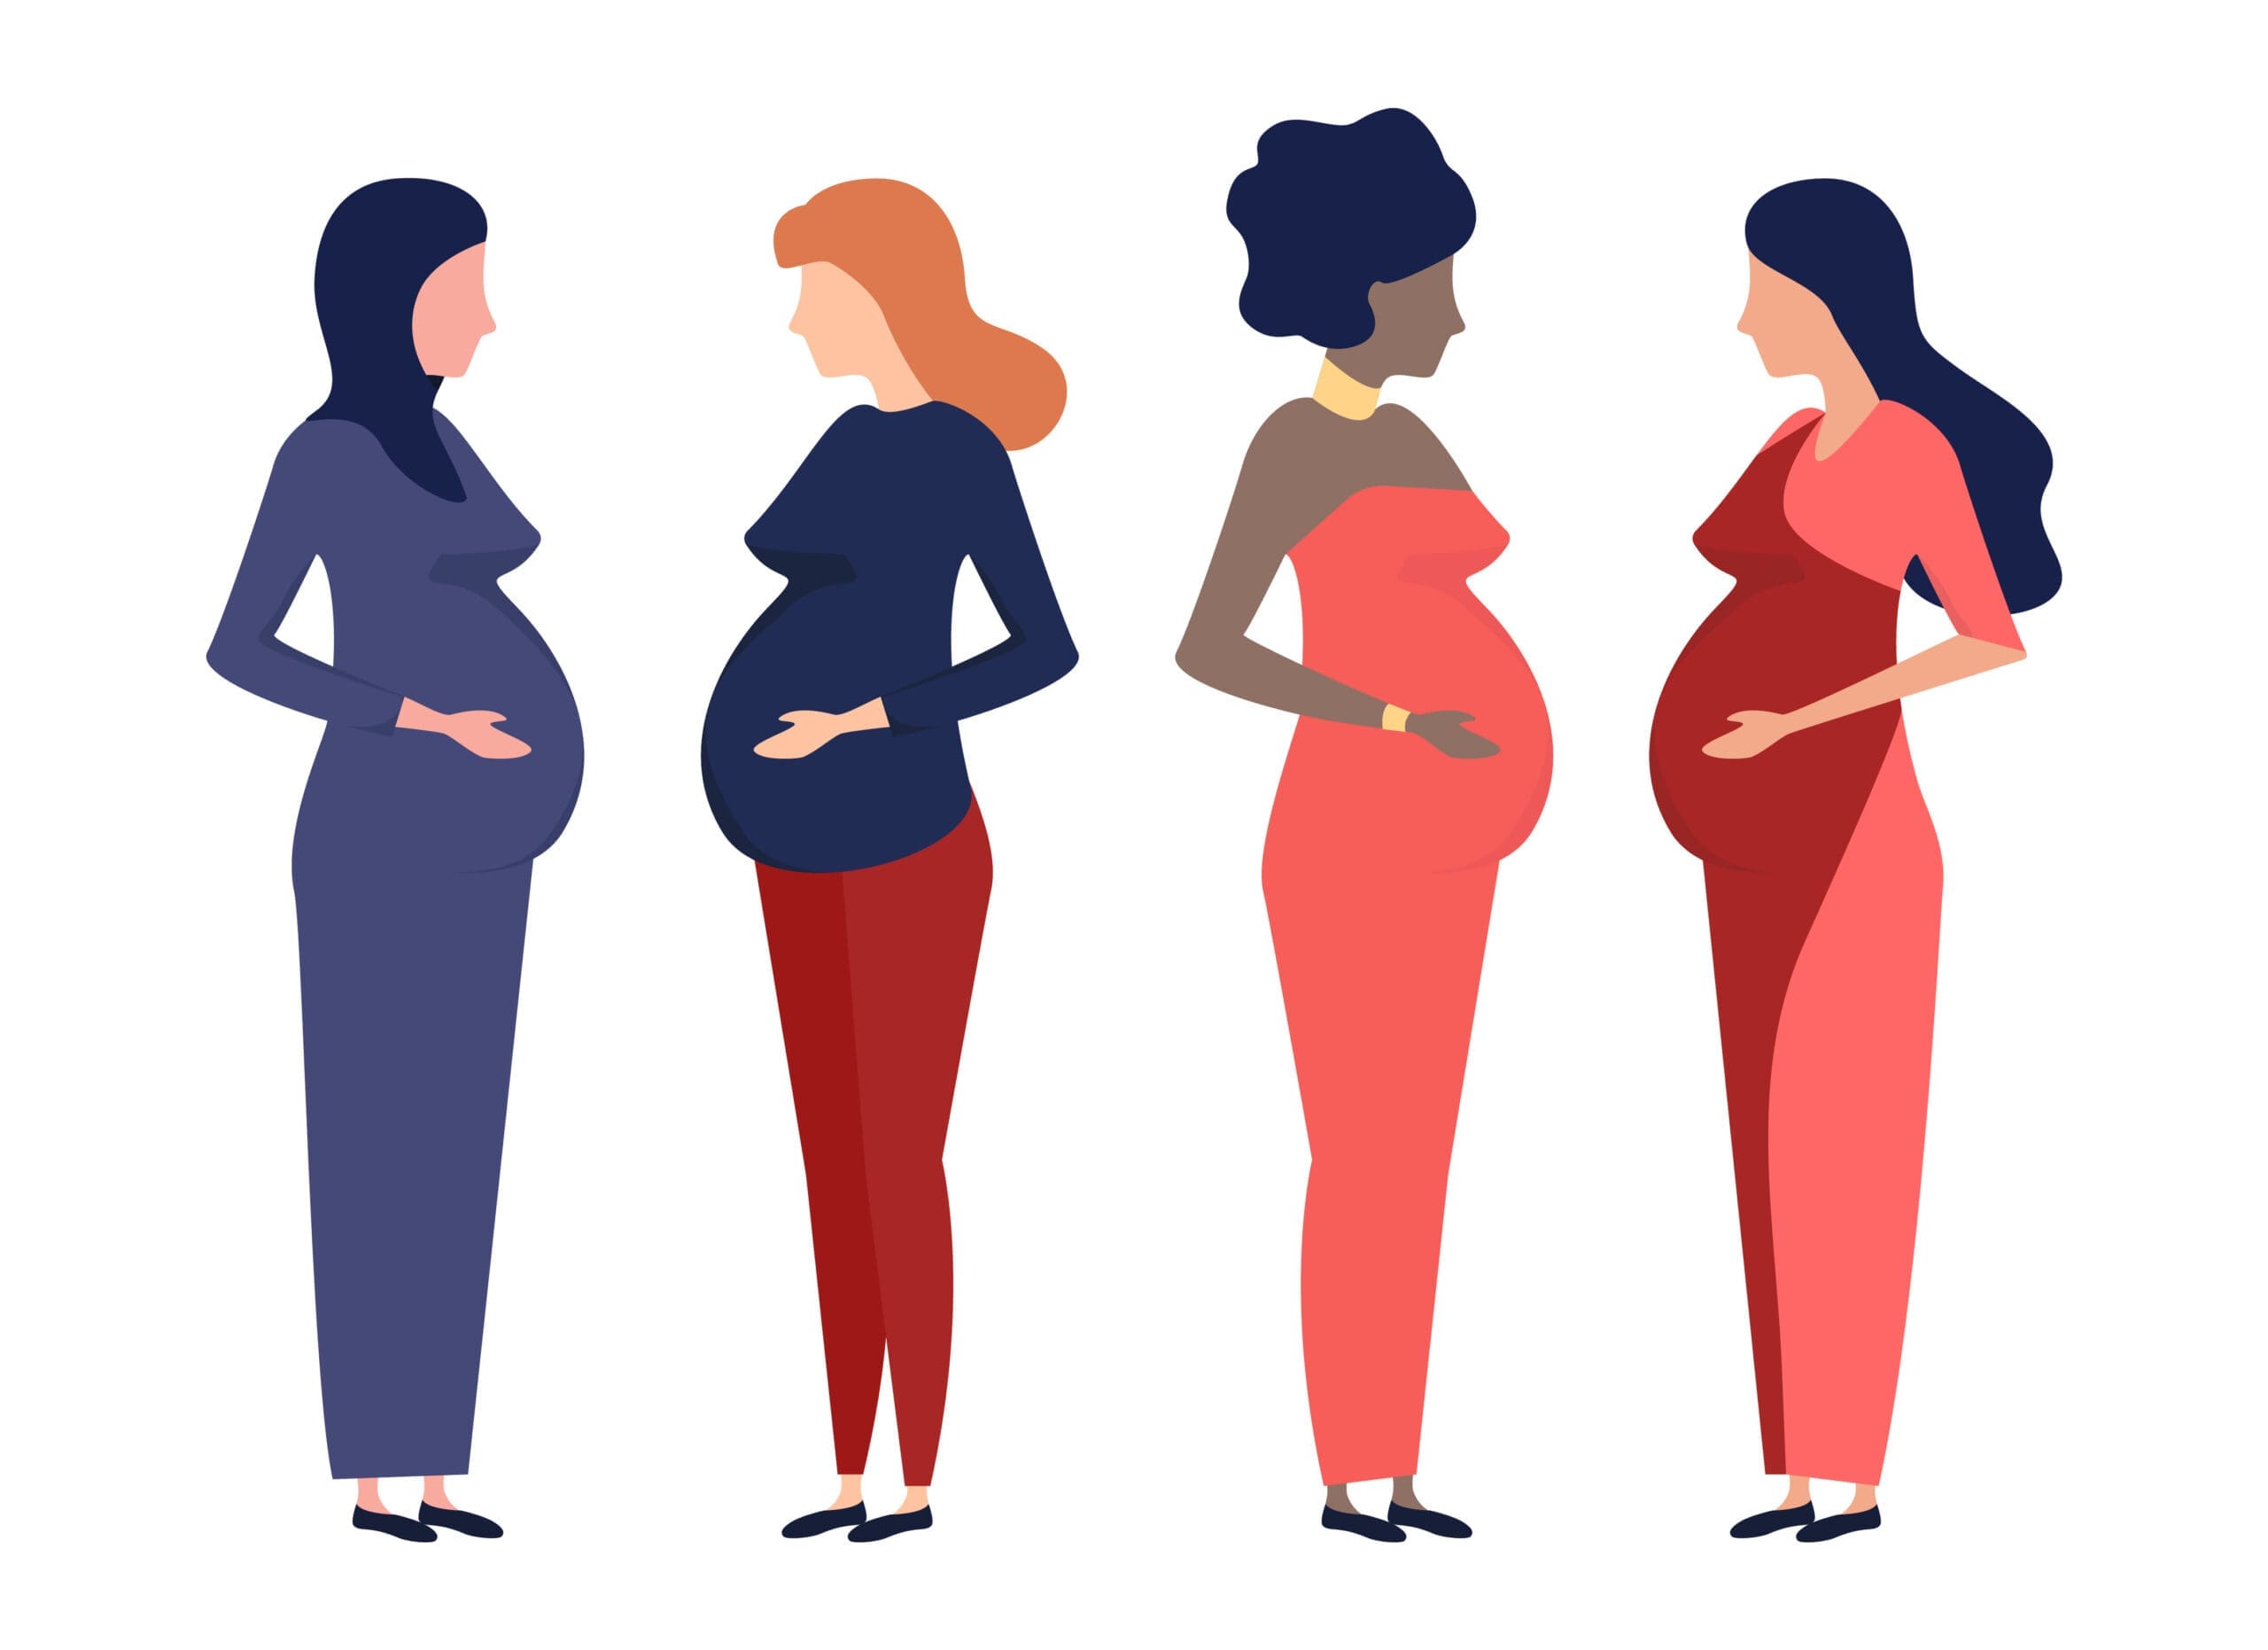 Should pregnant women be avoiding public gatherings?